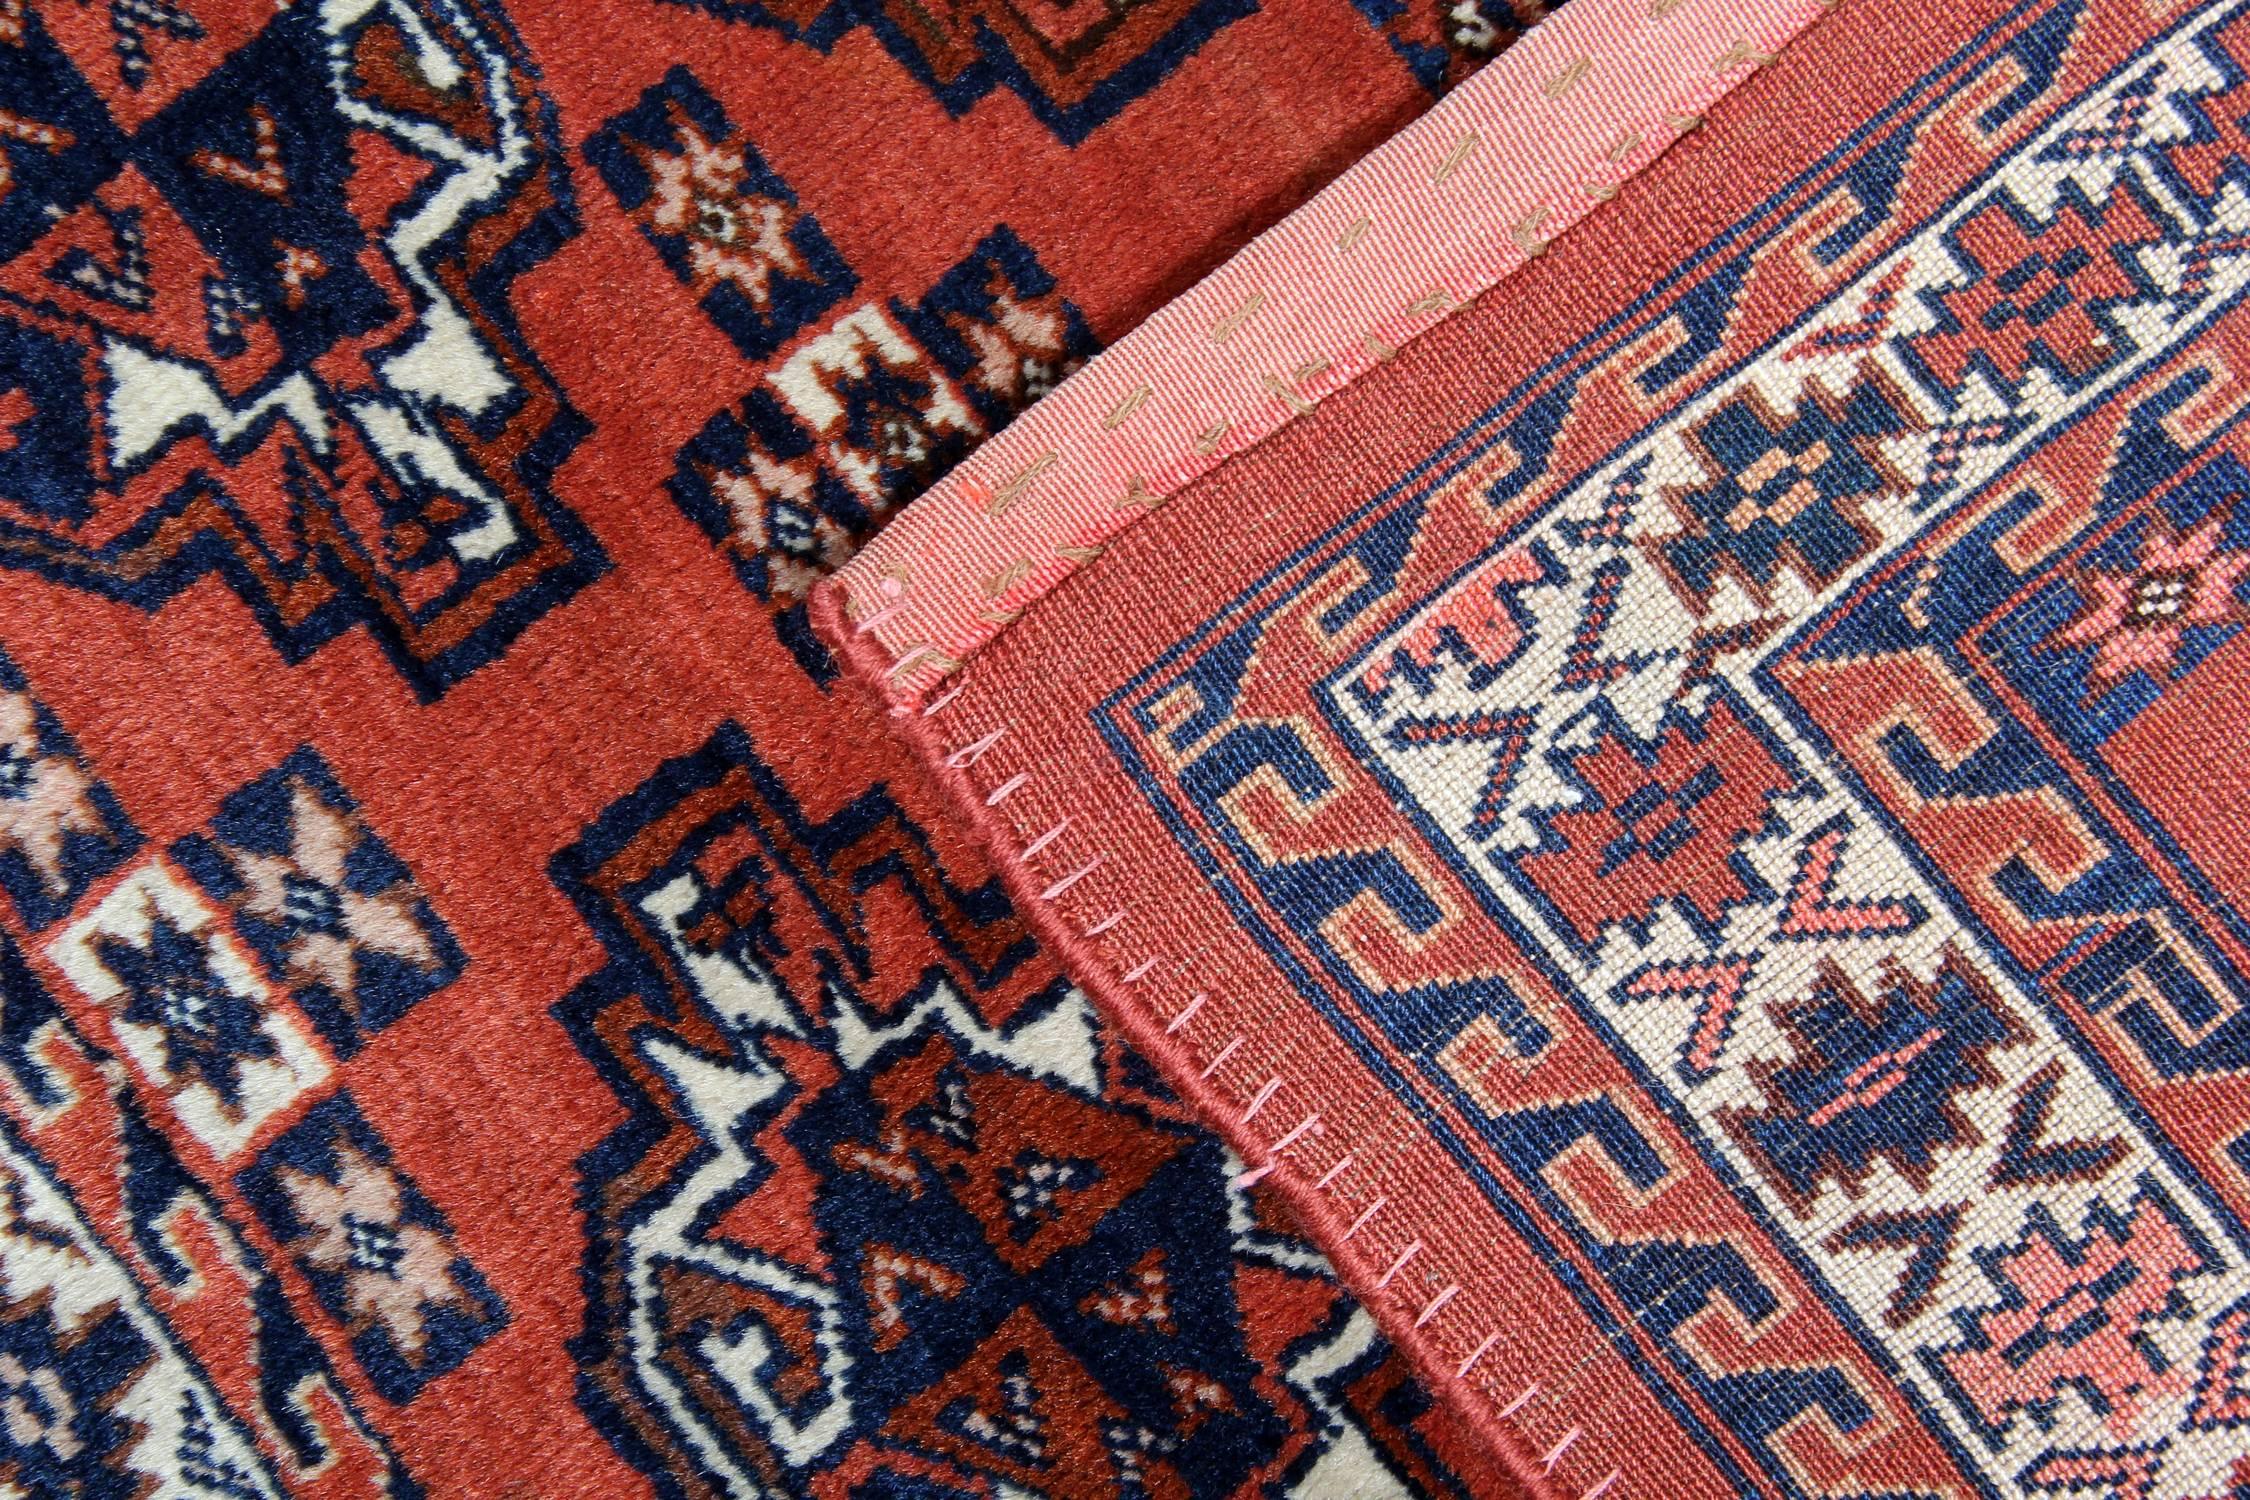 Central Asian Antique Rugs Turkmen Floor Handmade Carpet Area Red Oriental Rugs